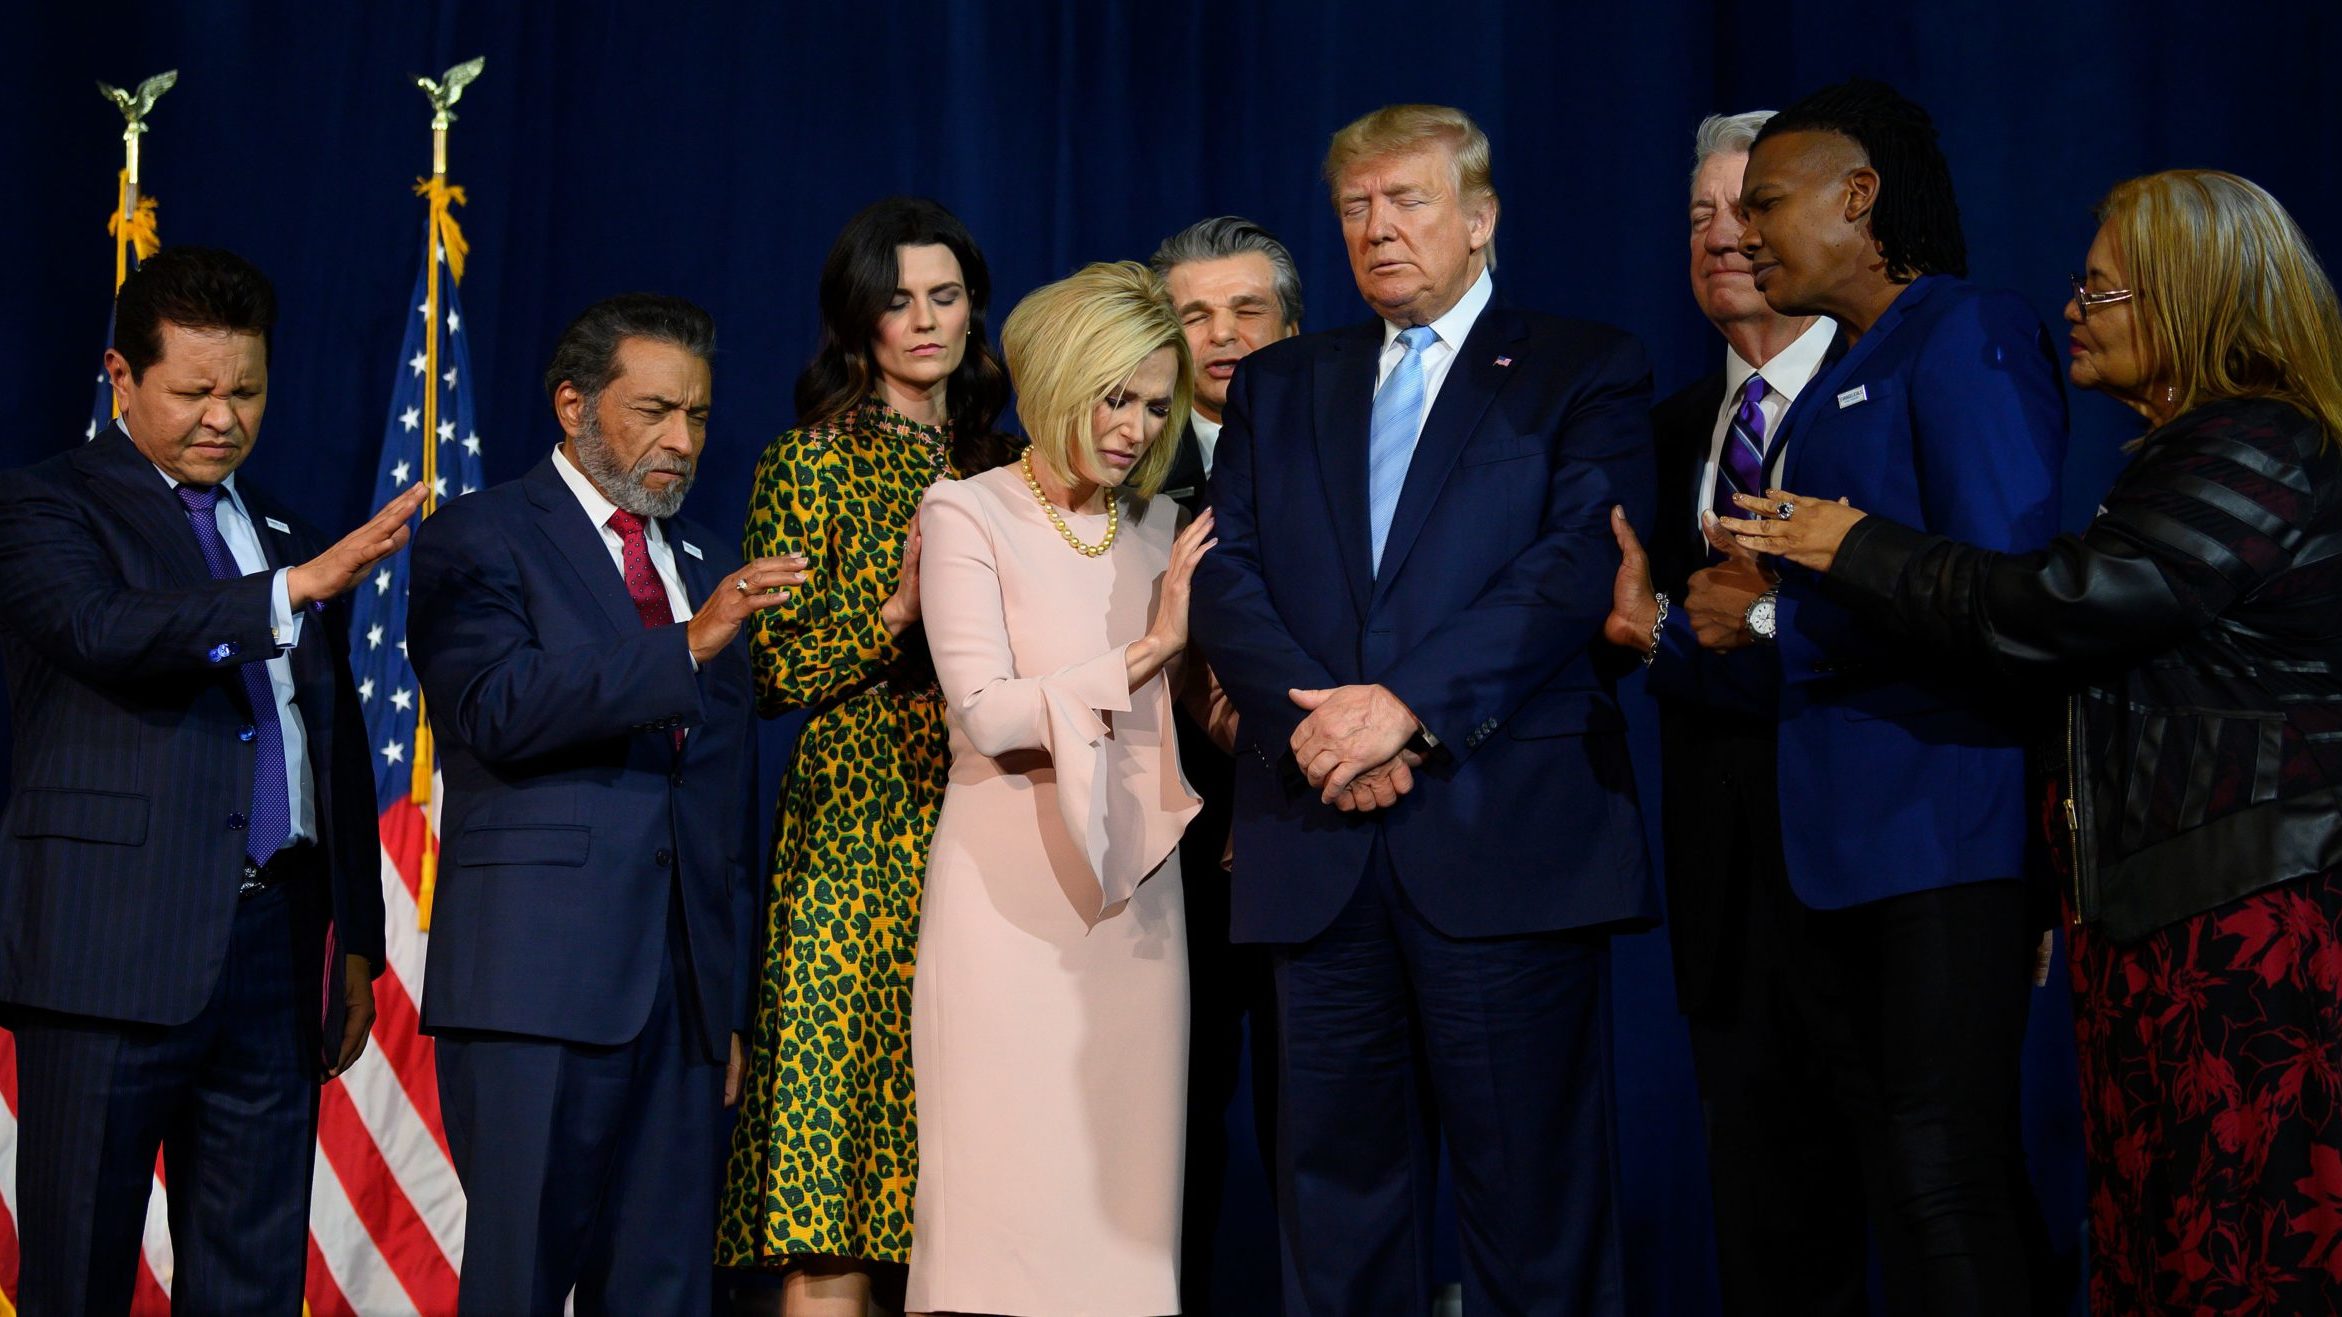 Trump Takes Wheel at 2020 Christian Media Summit